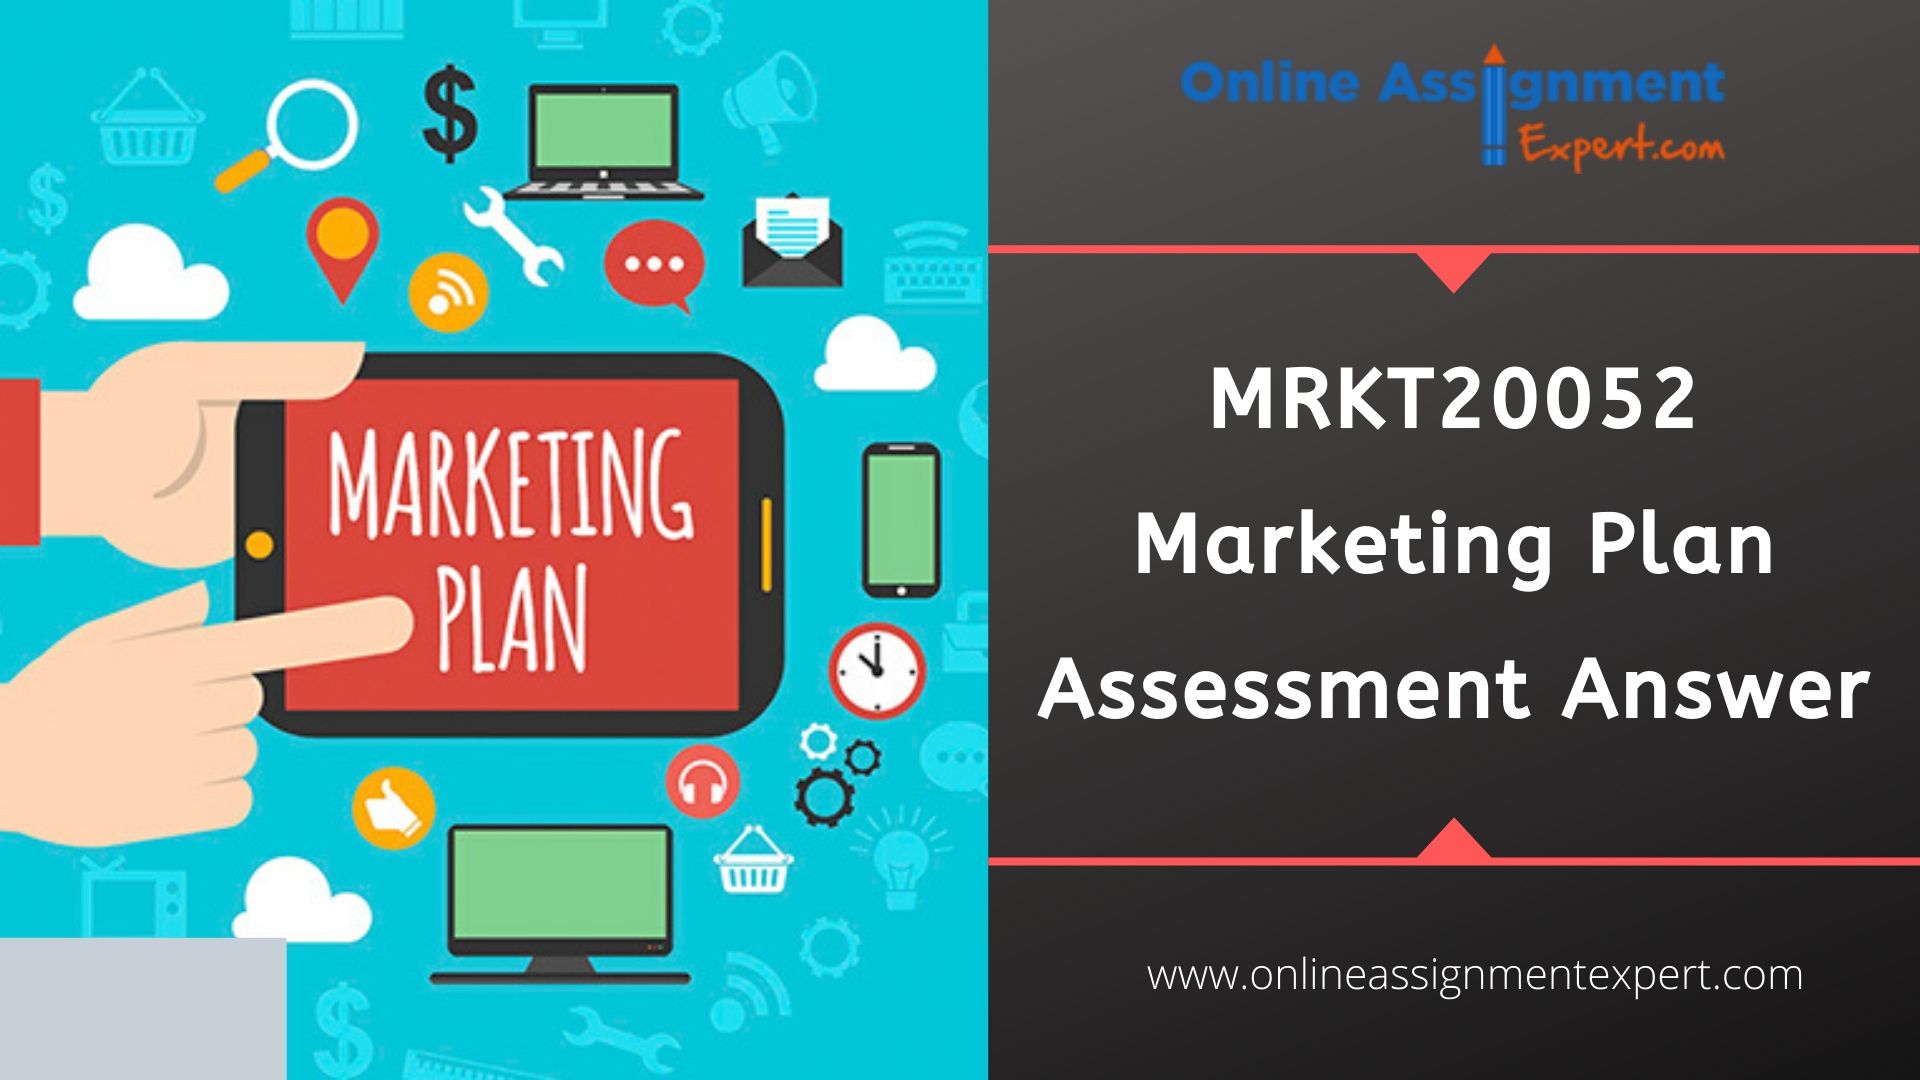 MRKT20052 Marketing Plan Assessment Answer